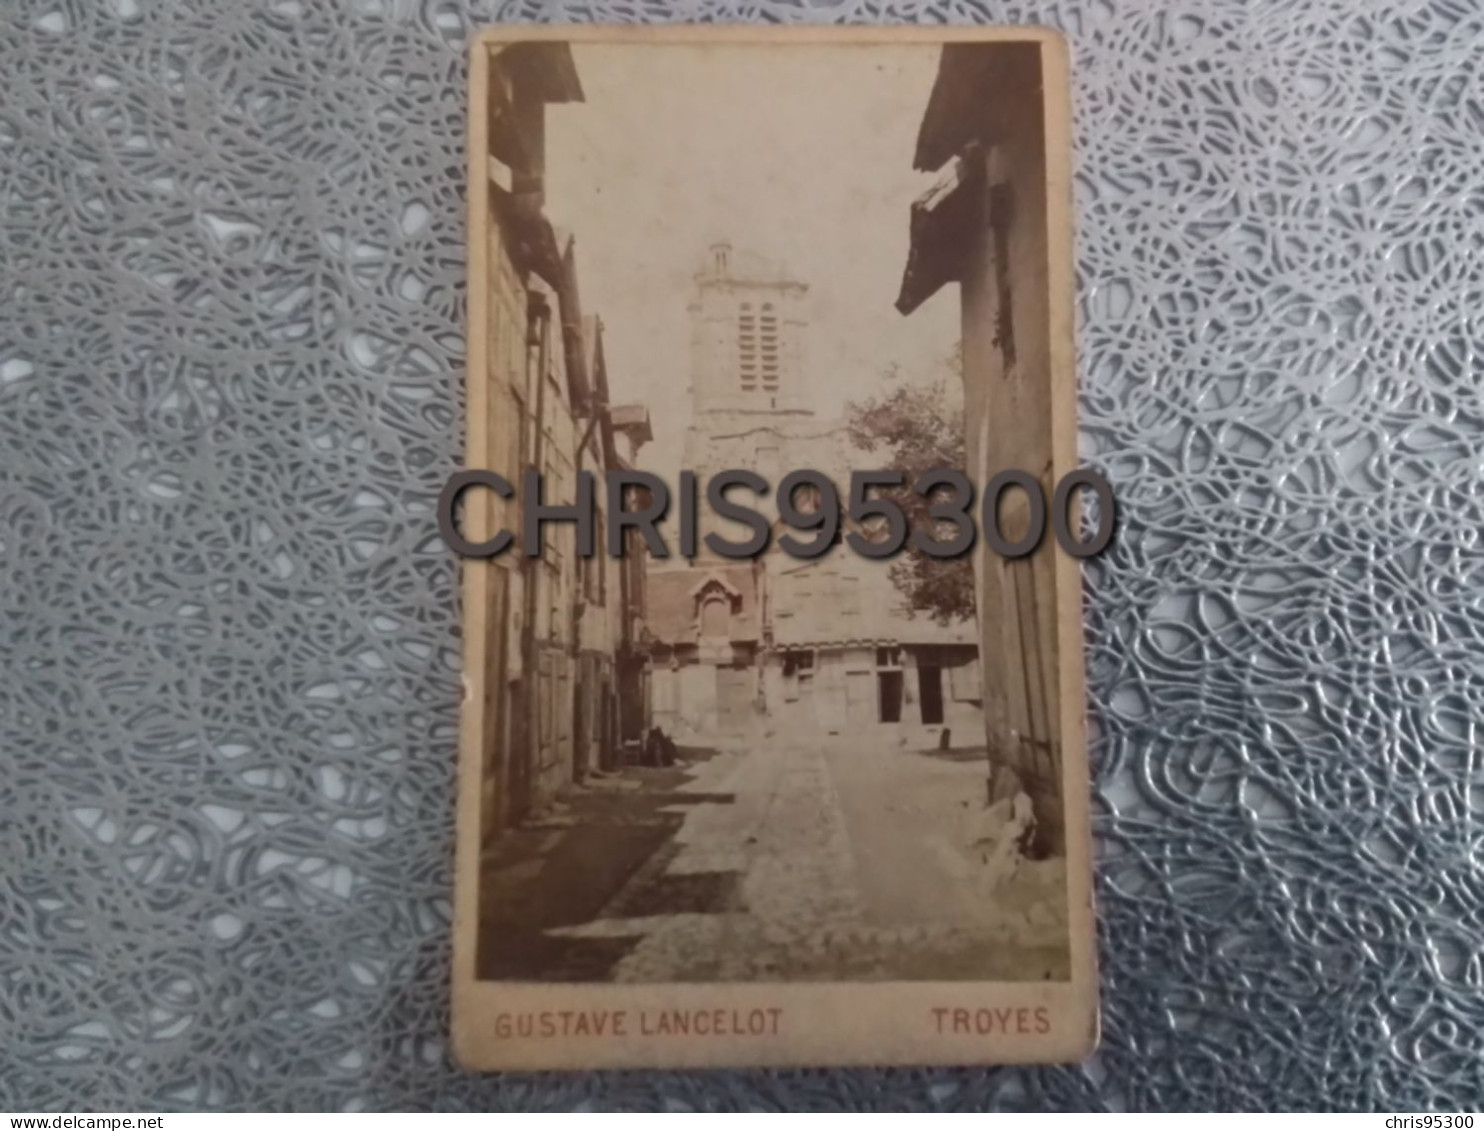 PHOTO CDV 19 EME SIECLE - TROYES 10 AUBE - Anciennes (Av. 1900)